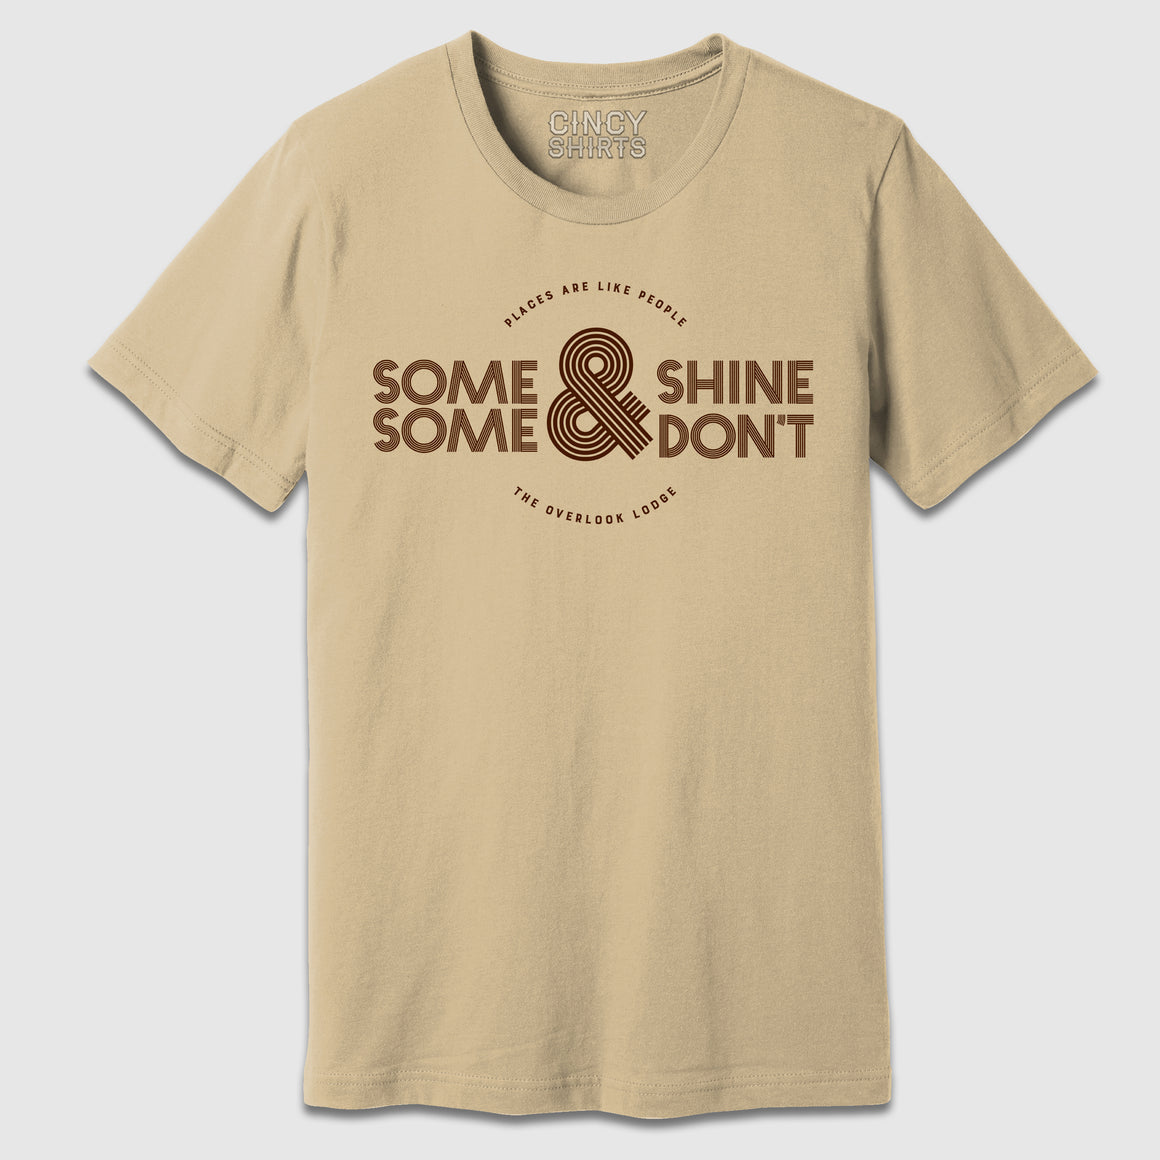 The Overlook Lodge "Some Shine" - Cincy Shirts